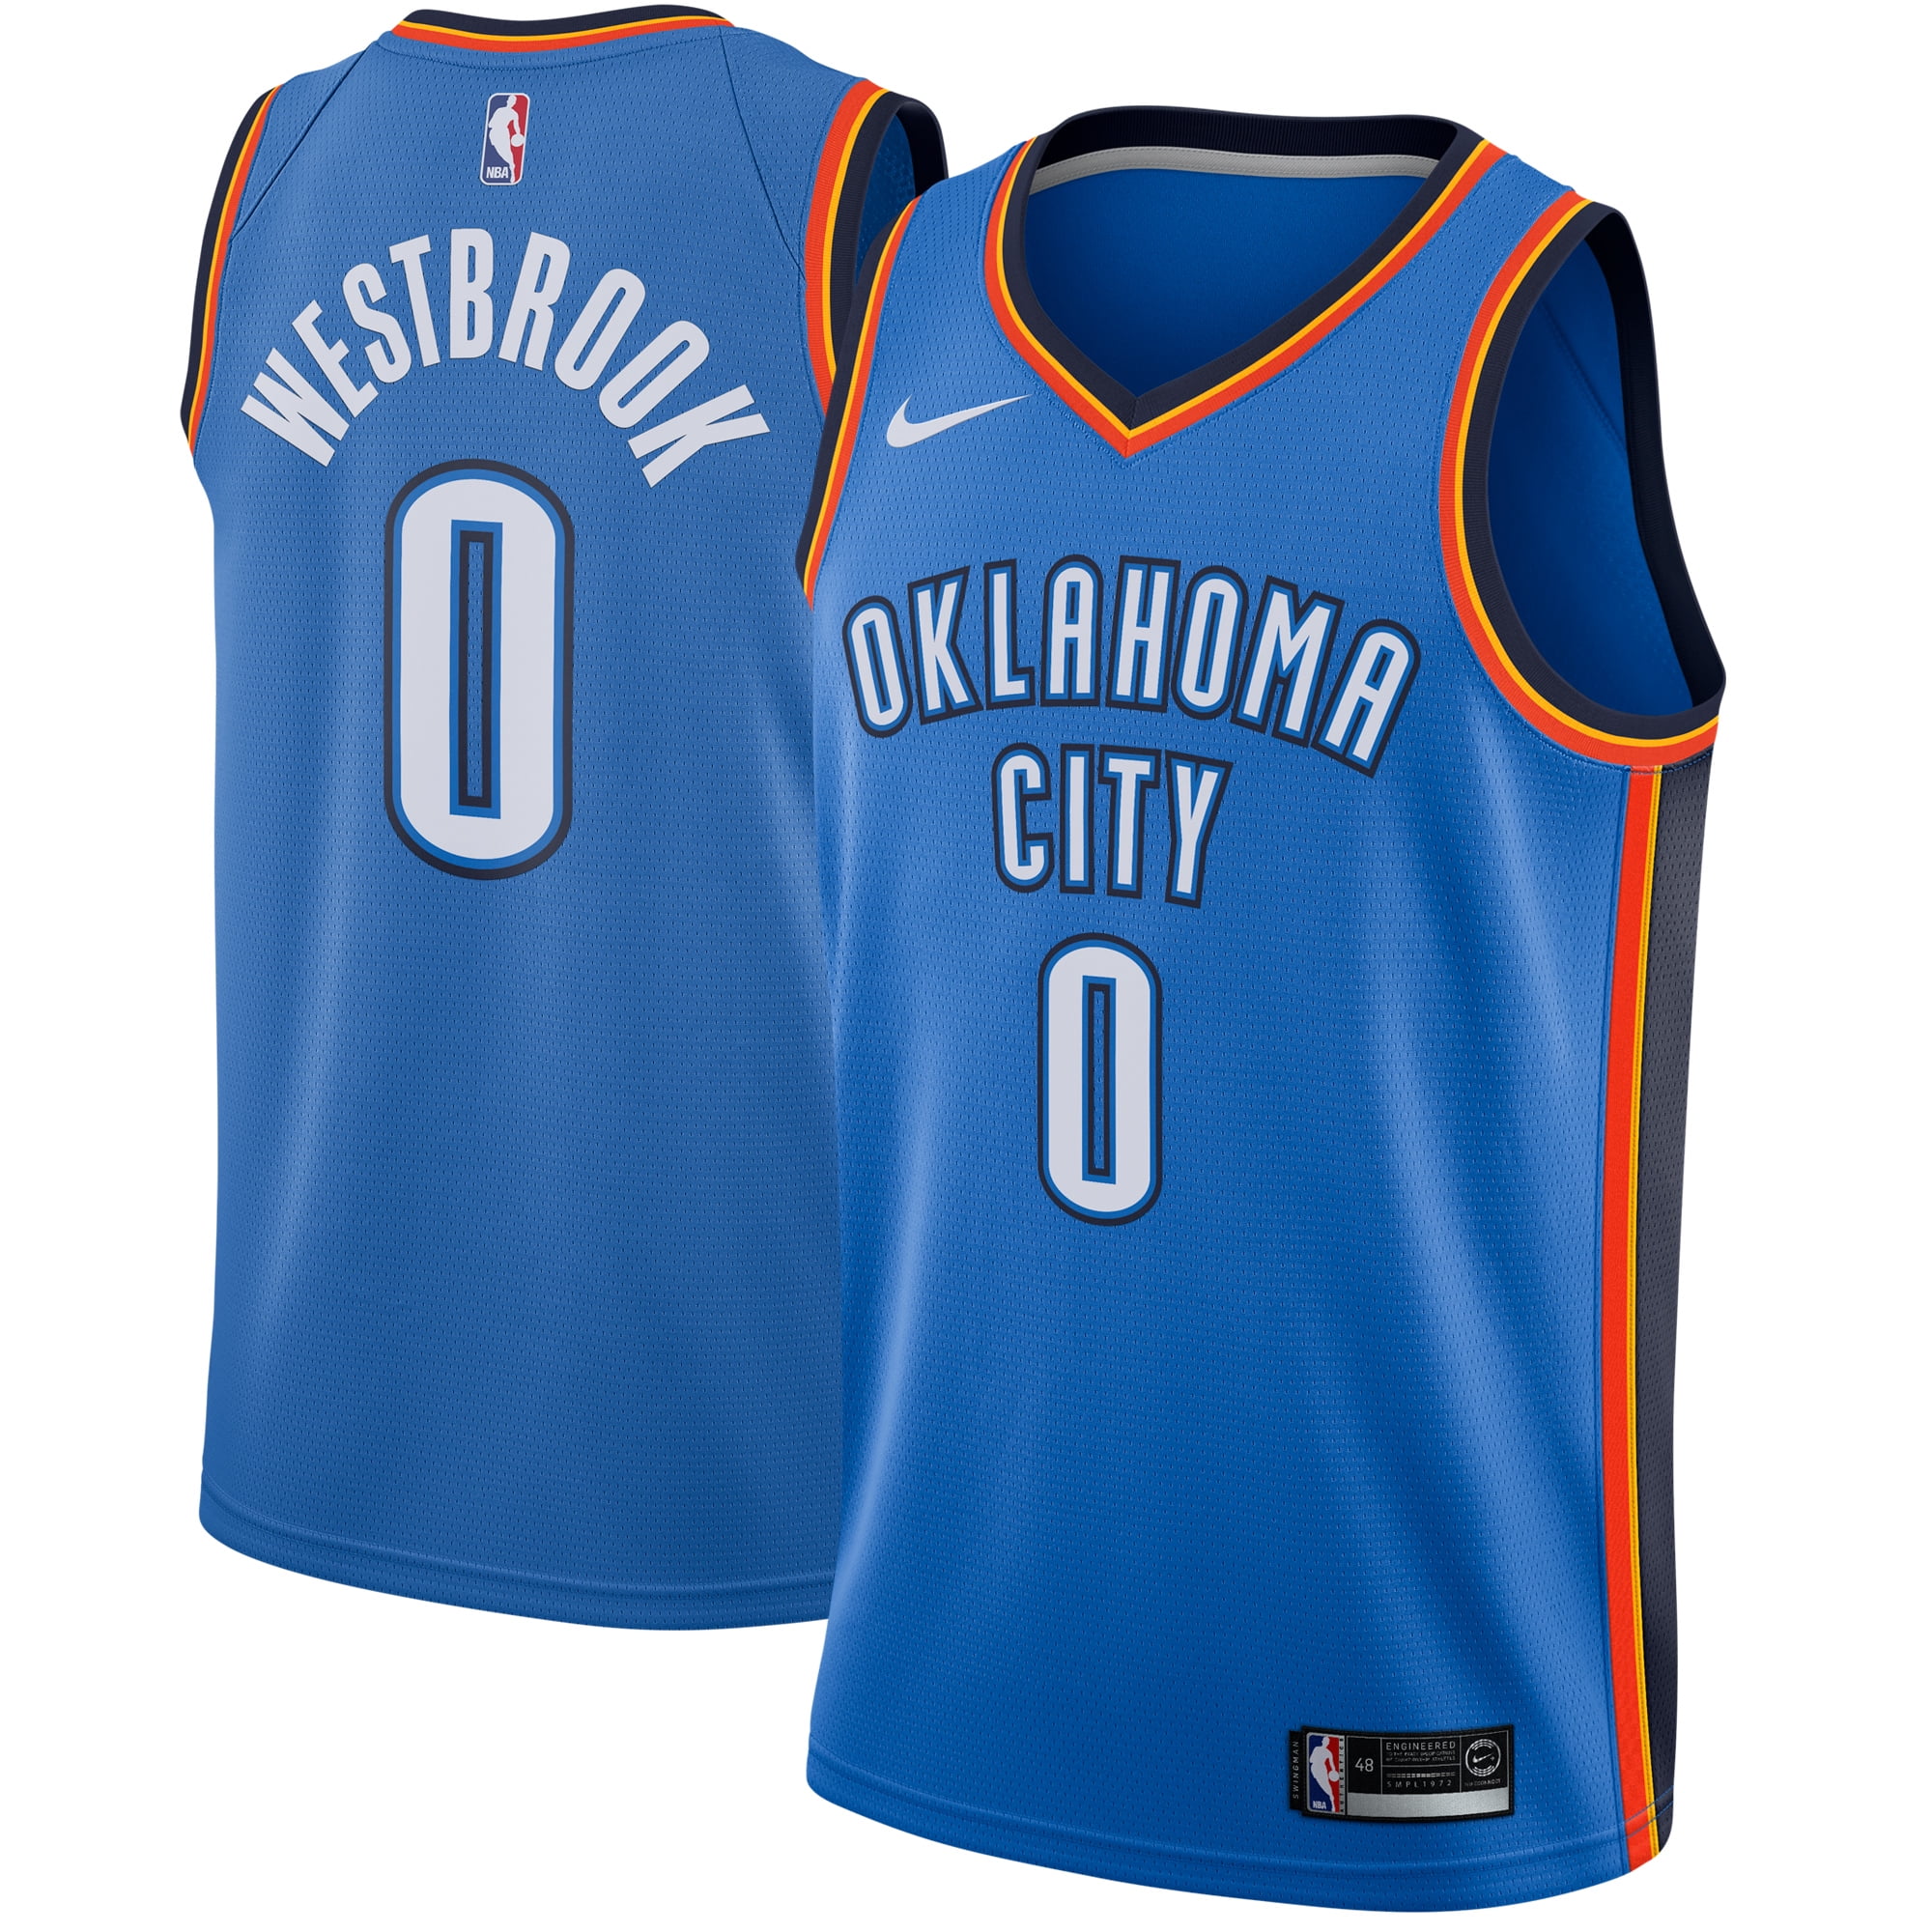 Nike NBA Oklahoma City Thunder Russell Westbrook City Swingman Jersey Gray (Men's/Basketball/Fans Edition) 912134-040 US XXXL